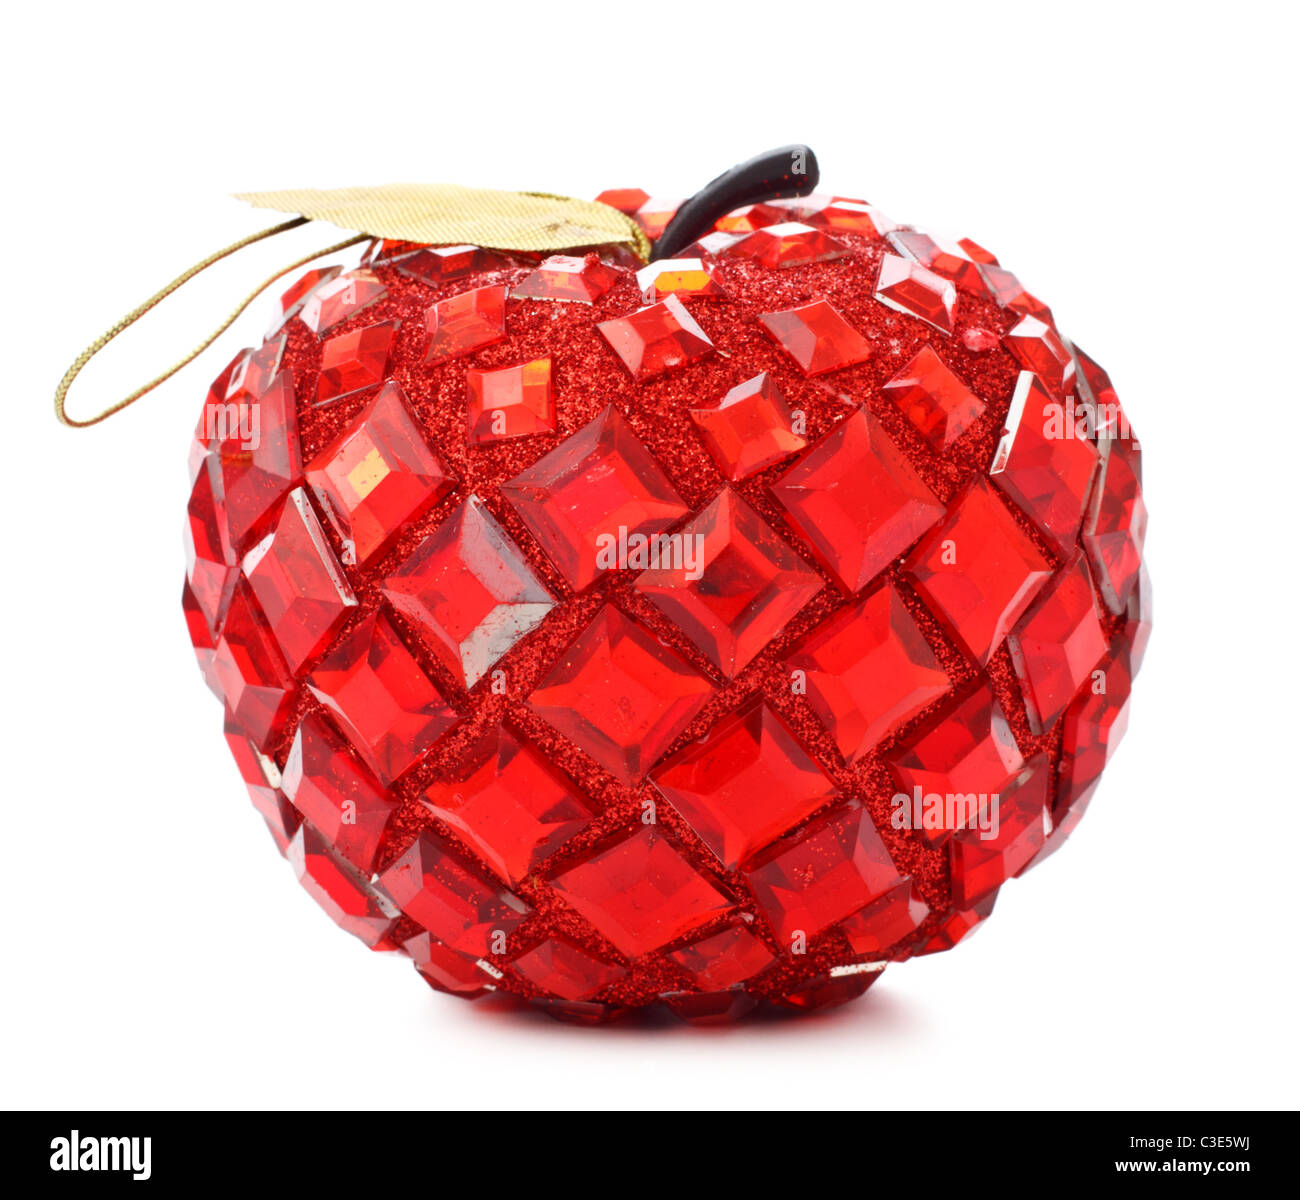 Boule de Noël en forme de pomme, isolated on white Photo Stock - Alamy